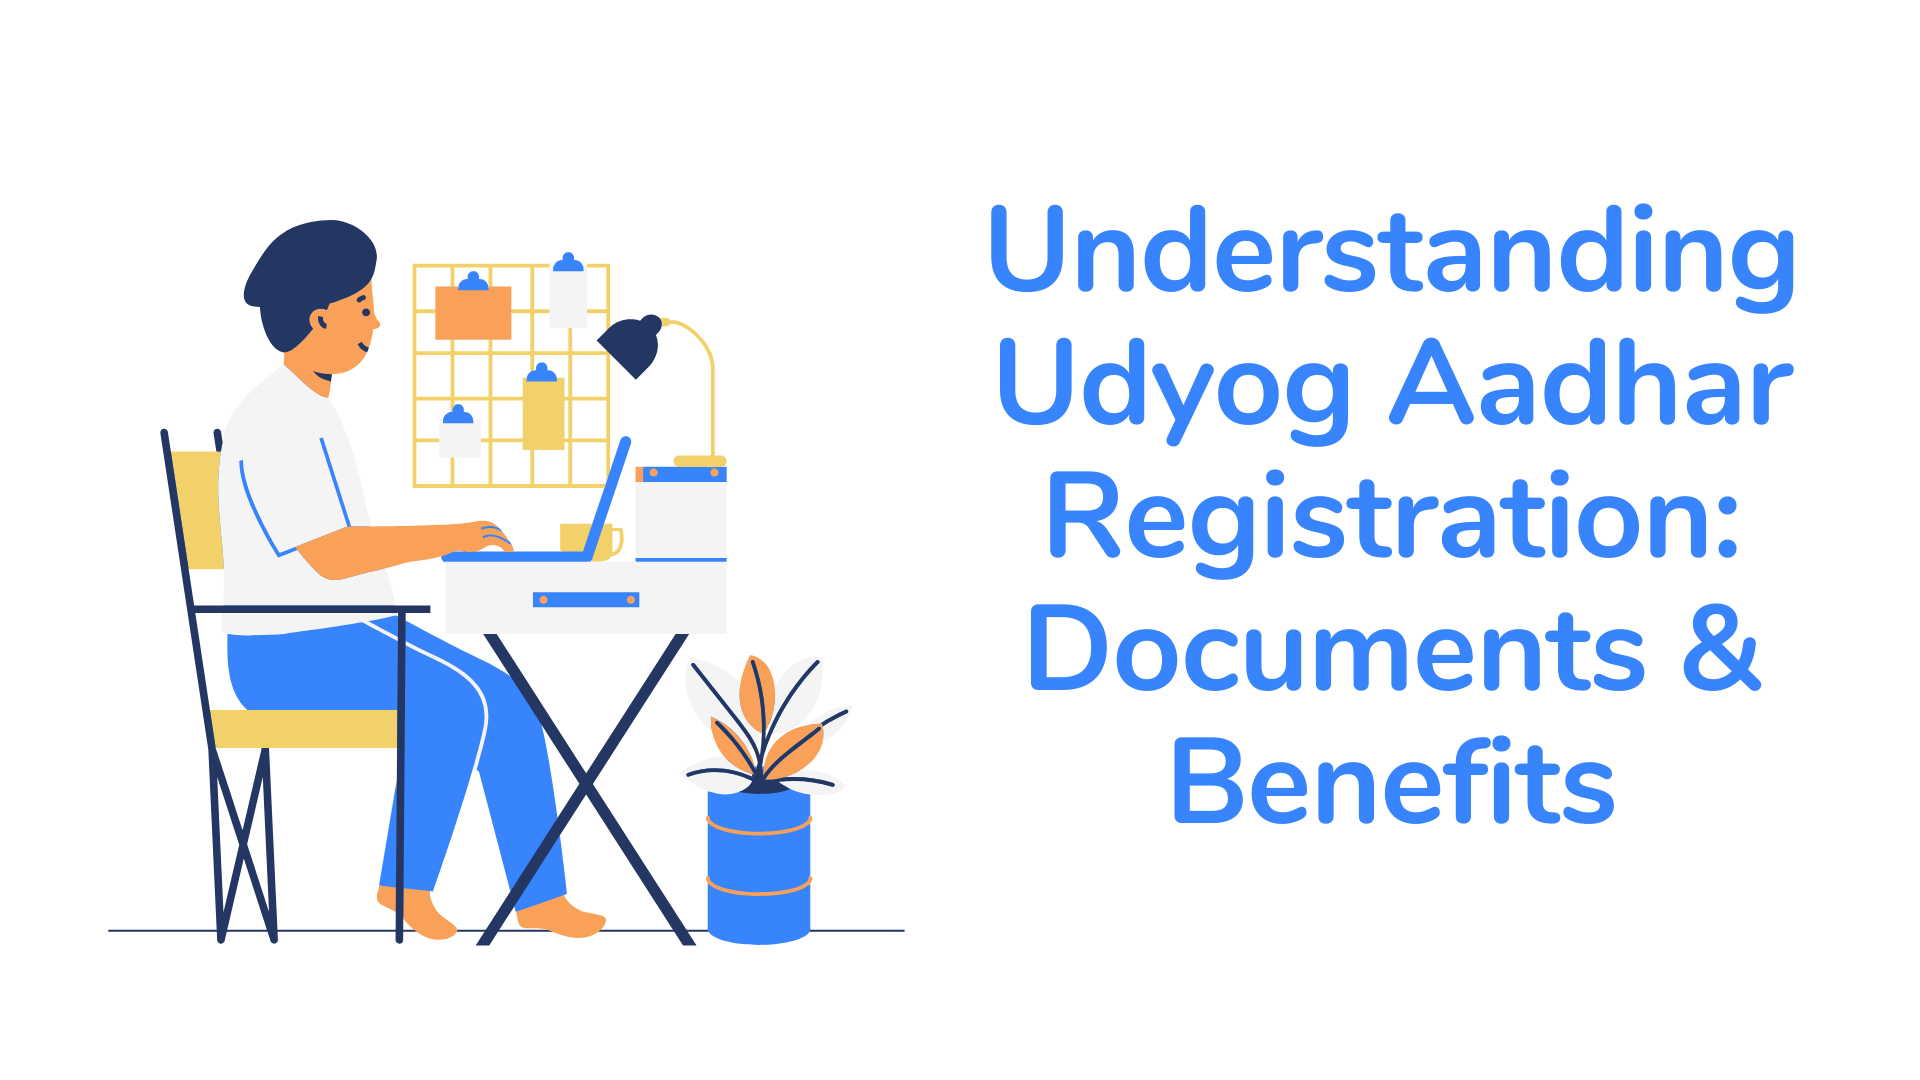 Understanding Udyog Aadhar Registration Documents & Benefits